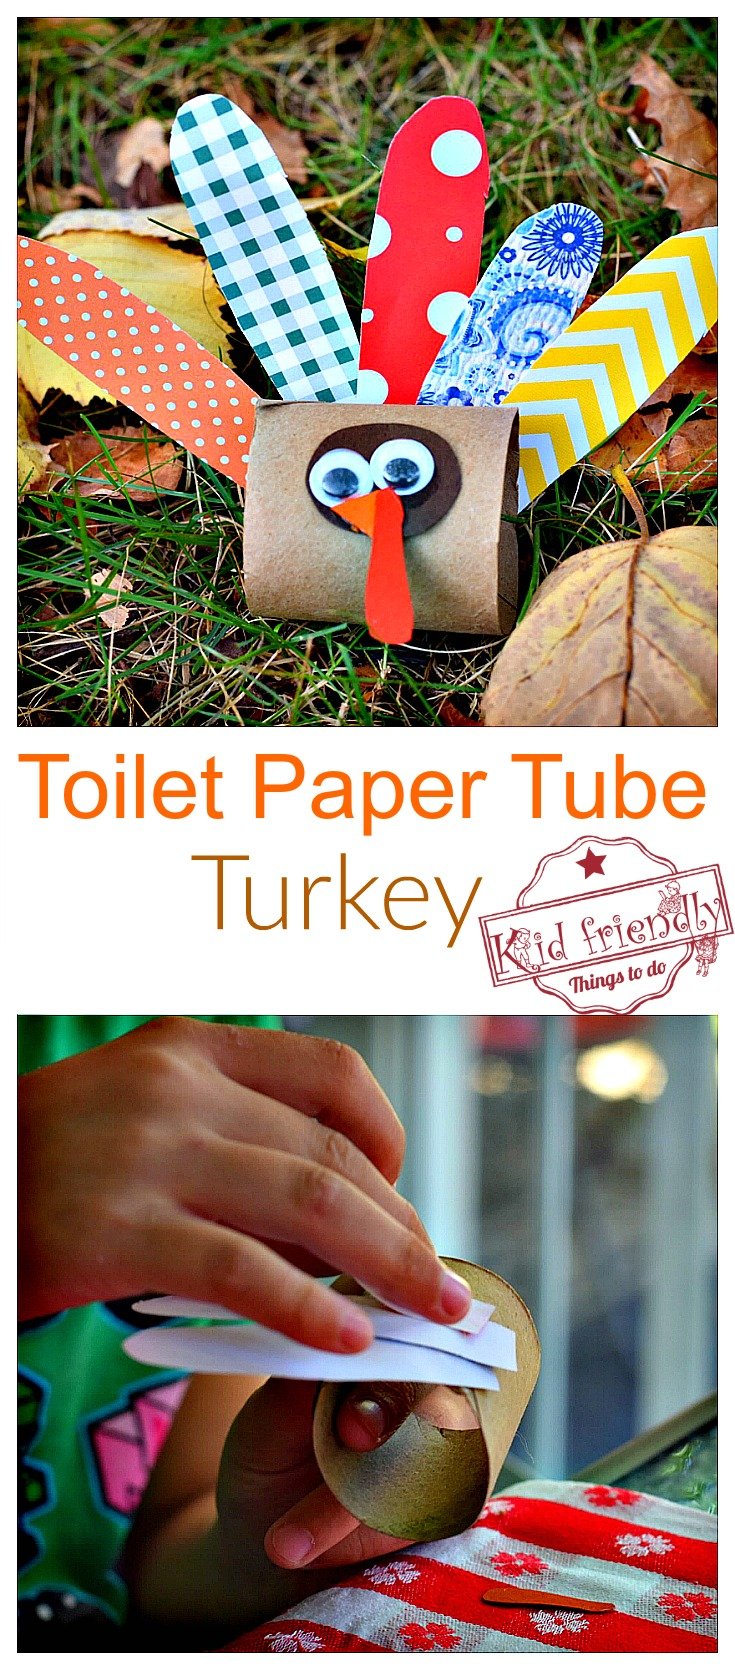 Make a Cute Little Turkey out of a Toilet Paper Tube - Thanksgiving Craft Idea - Easy enough for preschoolers, kindergarten & older kids too - www.kidfriendlythingstodo.com